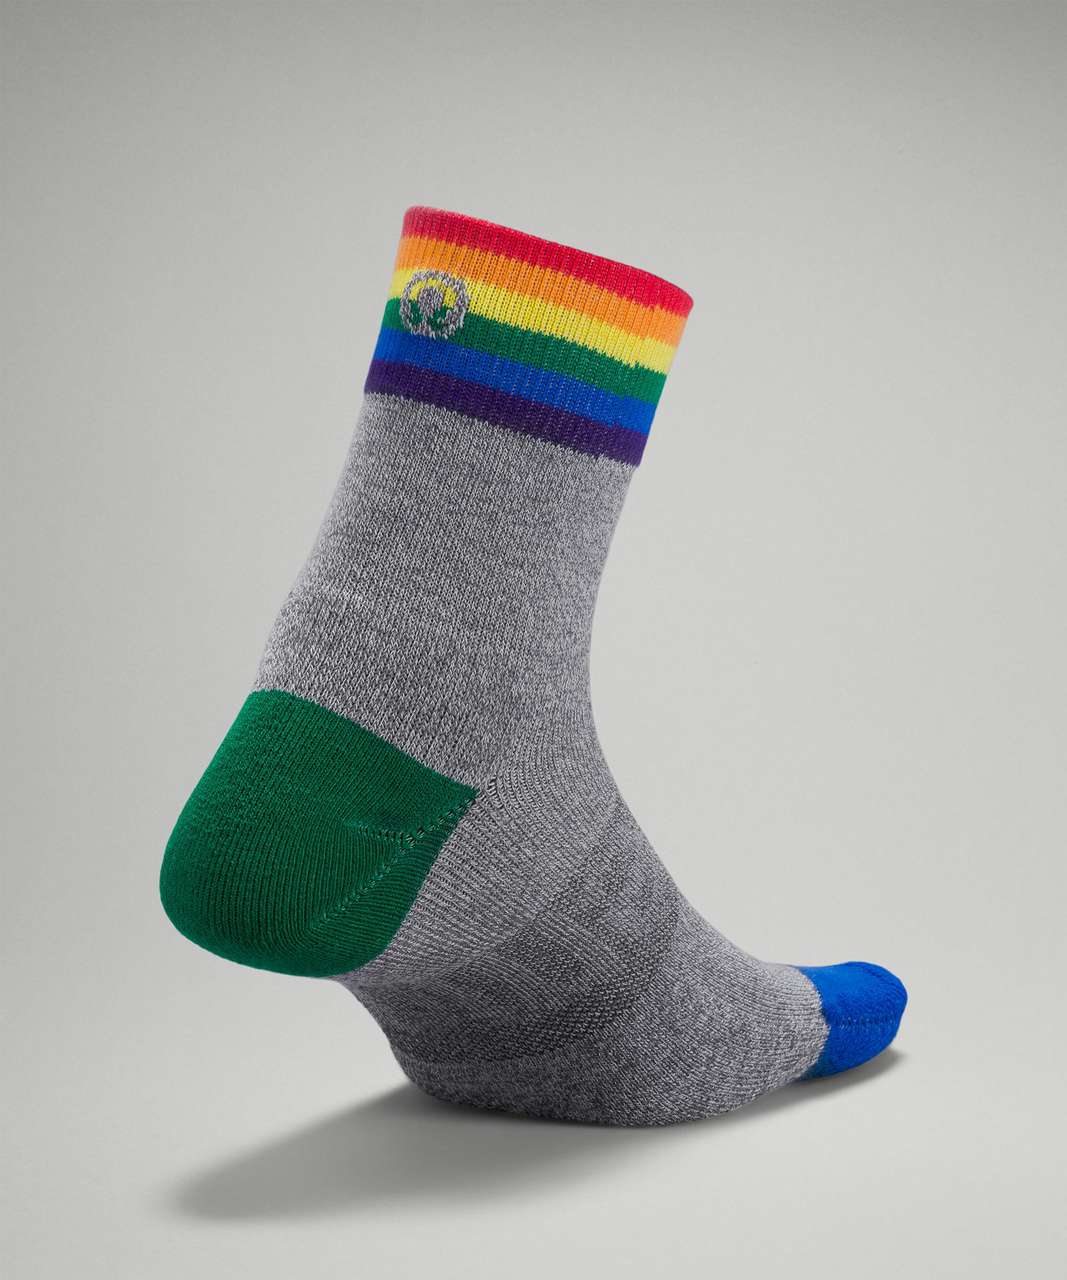 Rainbow.me – Ledger Support